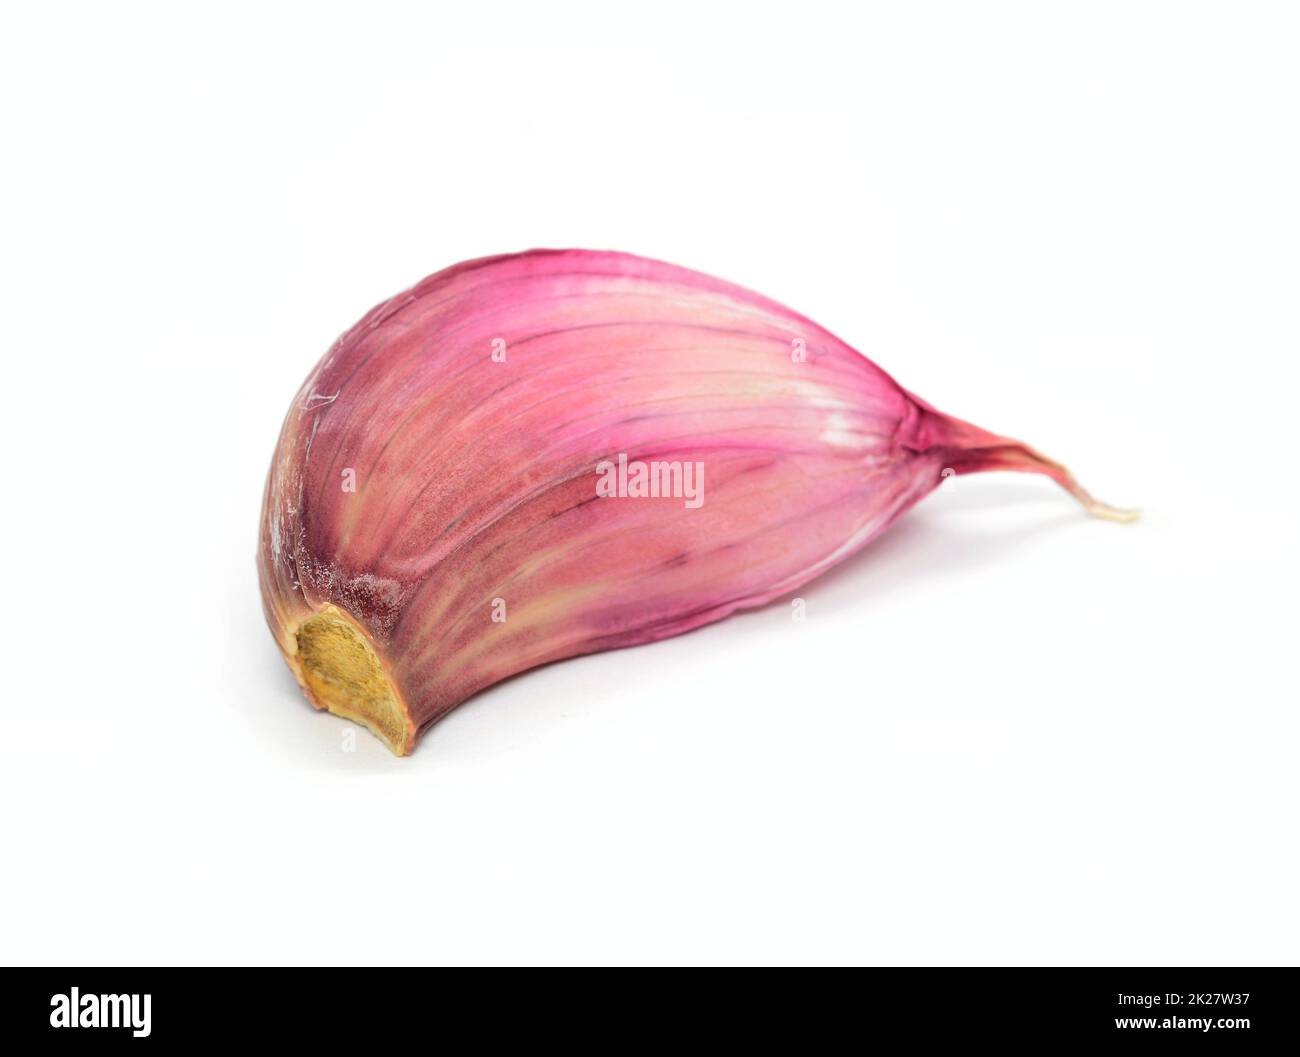 Clove of garlic on white background Stock Photo